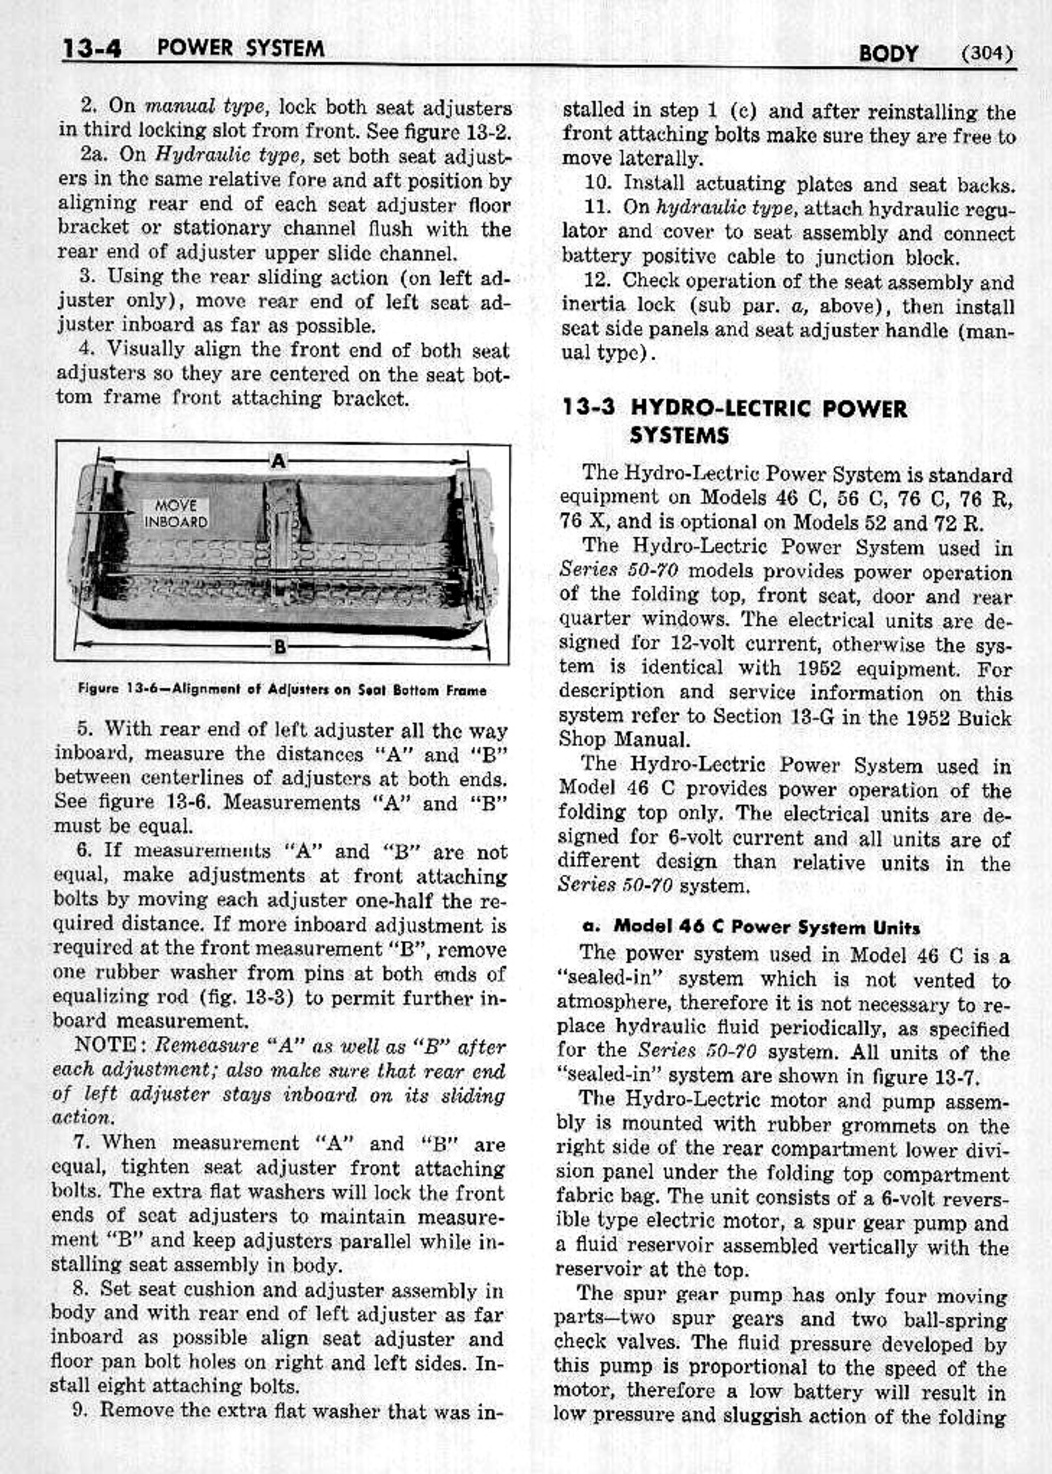 n_14 1953 Buick Shop Manual - Body-004-004.jpg